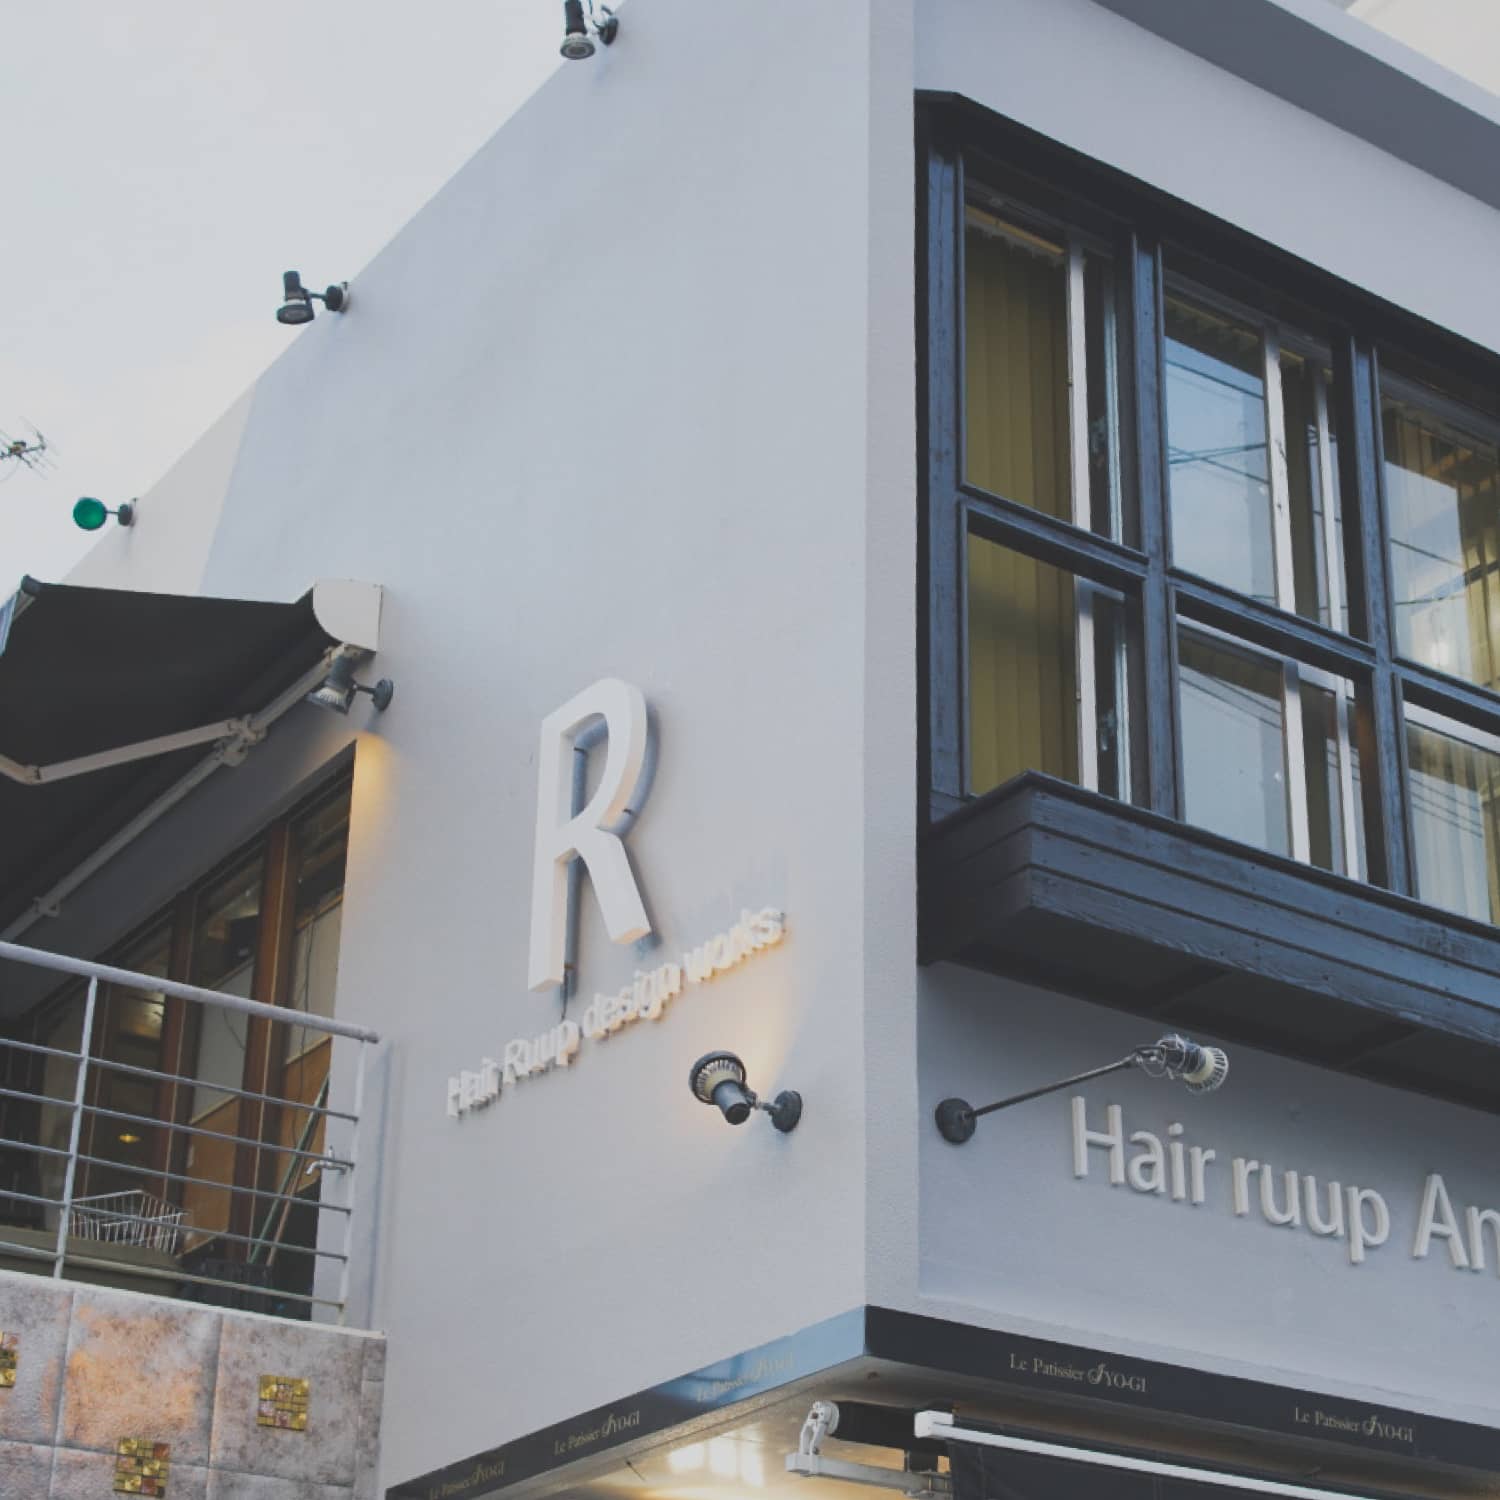 Hair ruup design works｜那覇市の美容室 – 最高のヘアデザインとカットの撮影したモデル写真